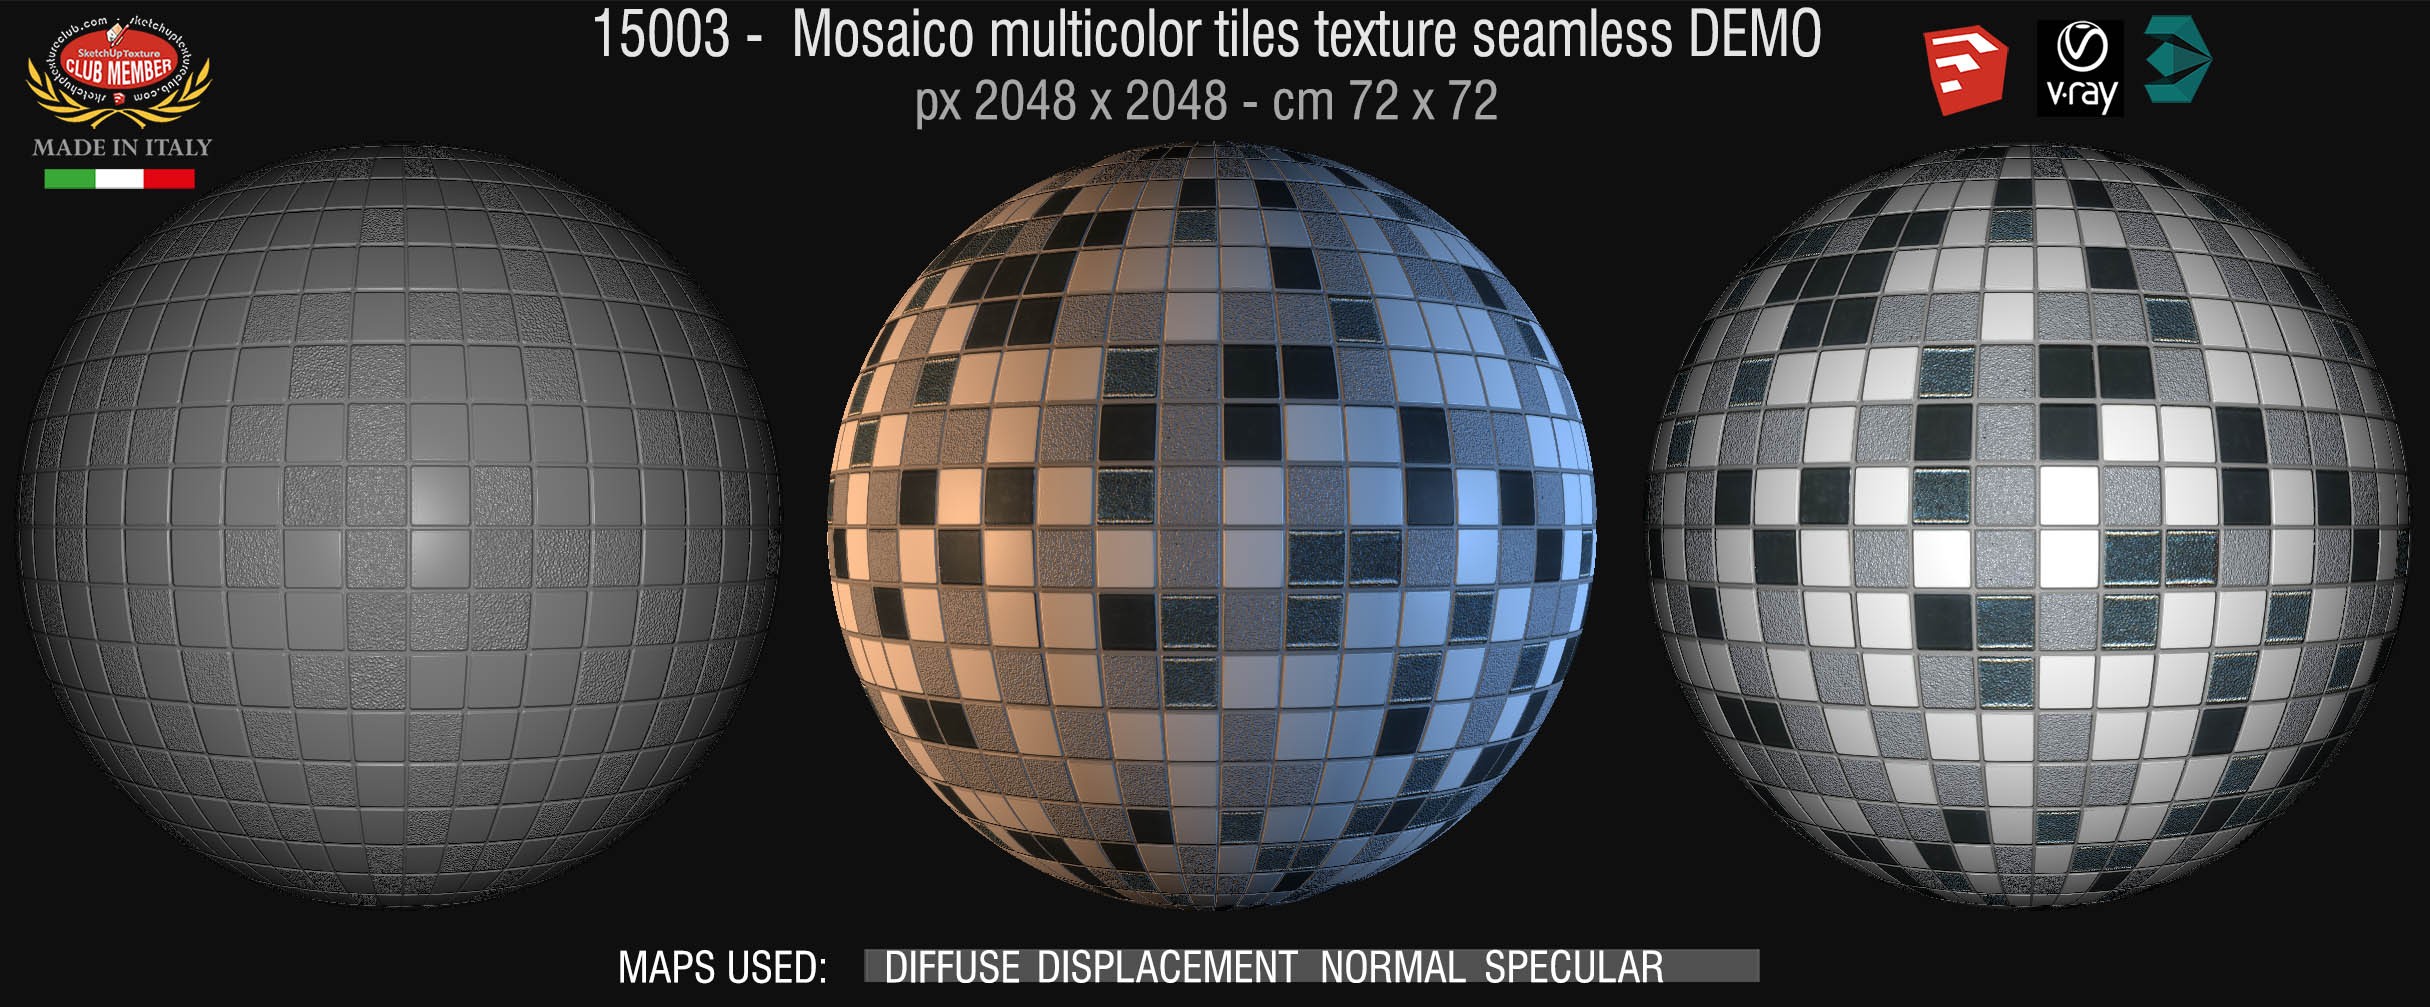 15003 Mosaico multicolor tiles texture seamless + maps DEMO